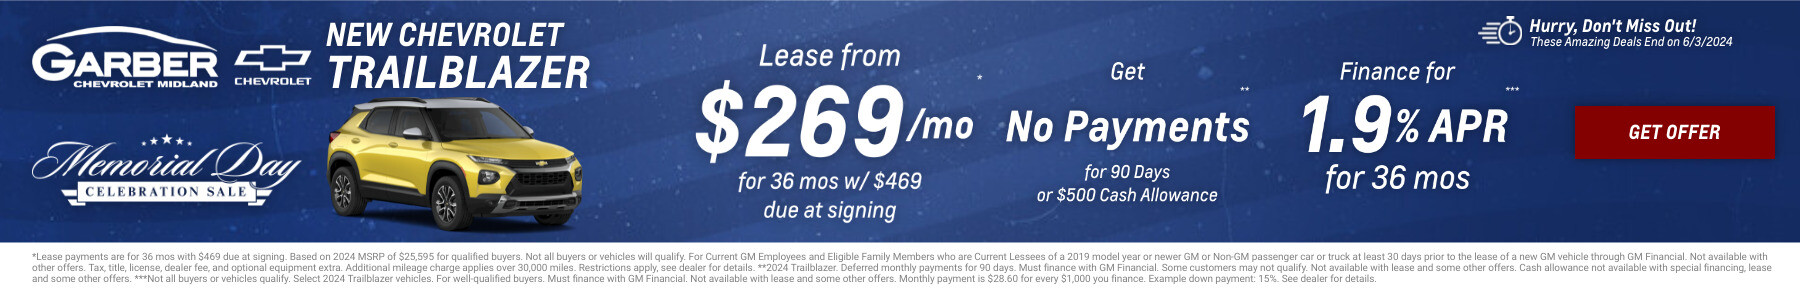 New Chevrolet Trailblazer Current Deals and Offers in Midland, MI